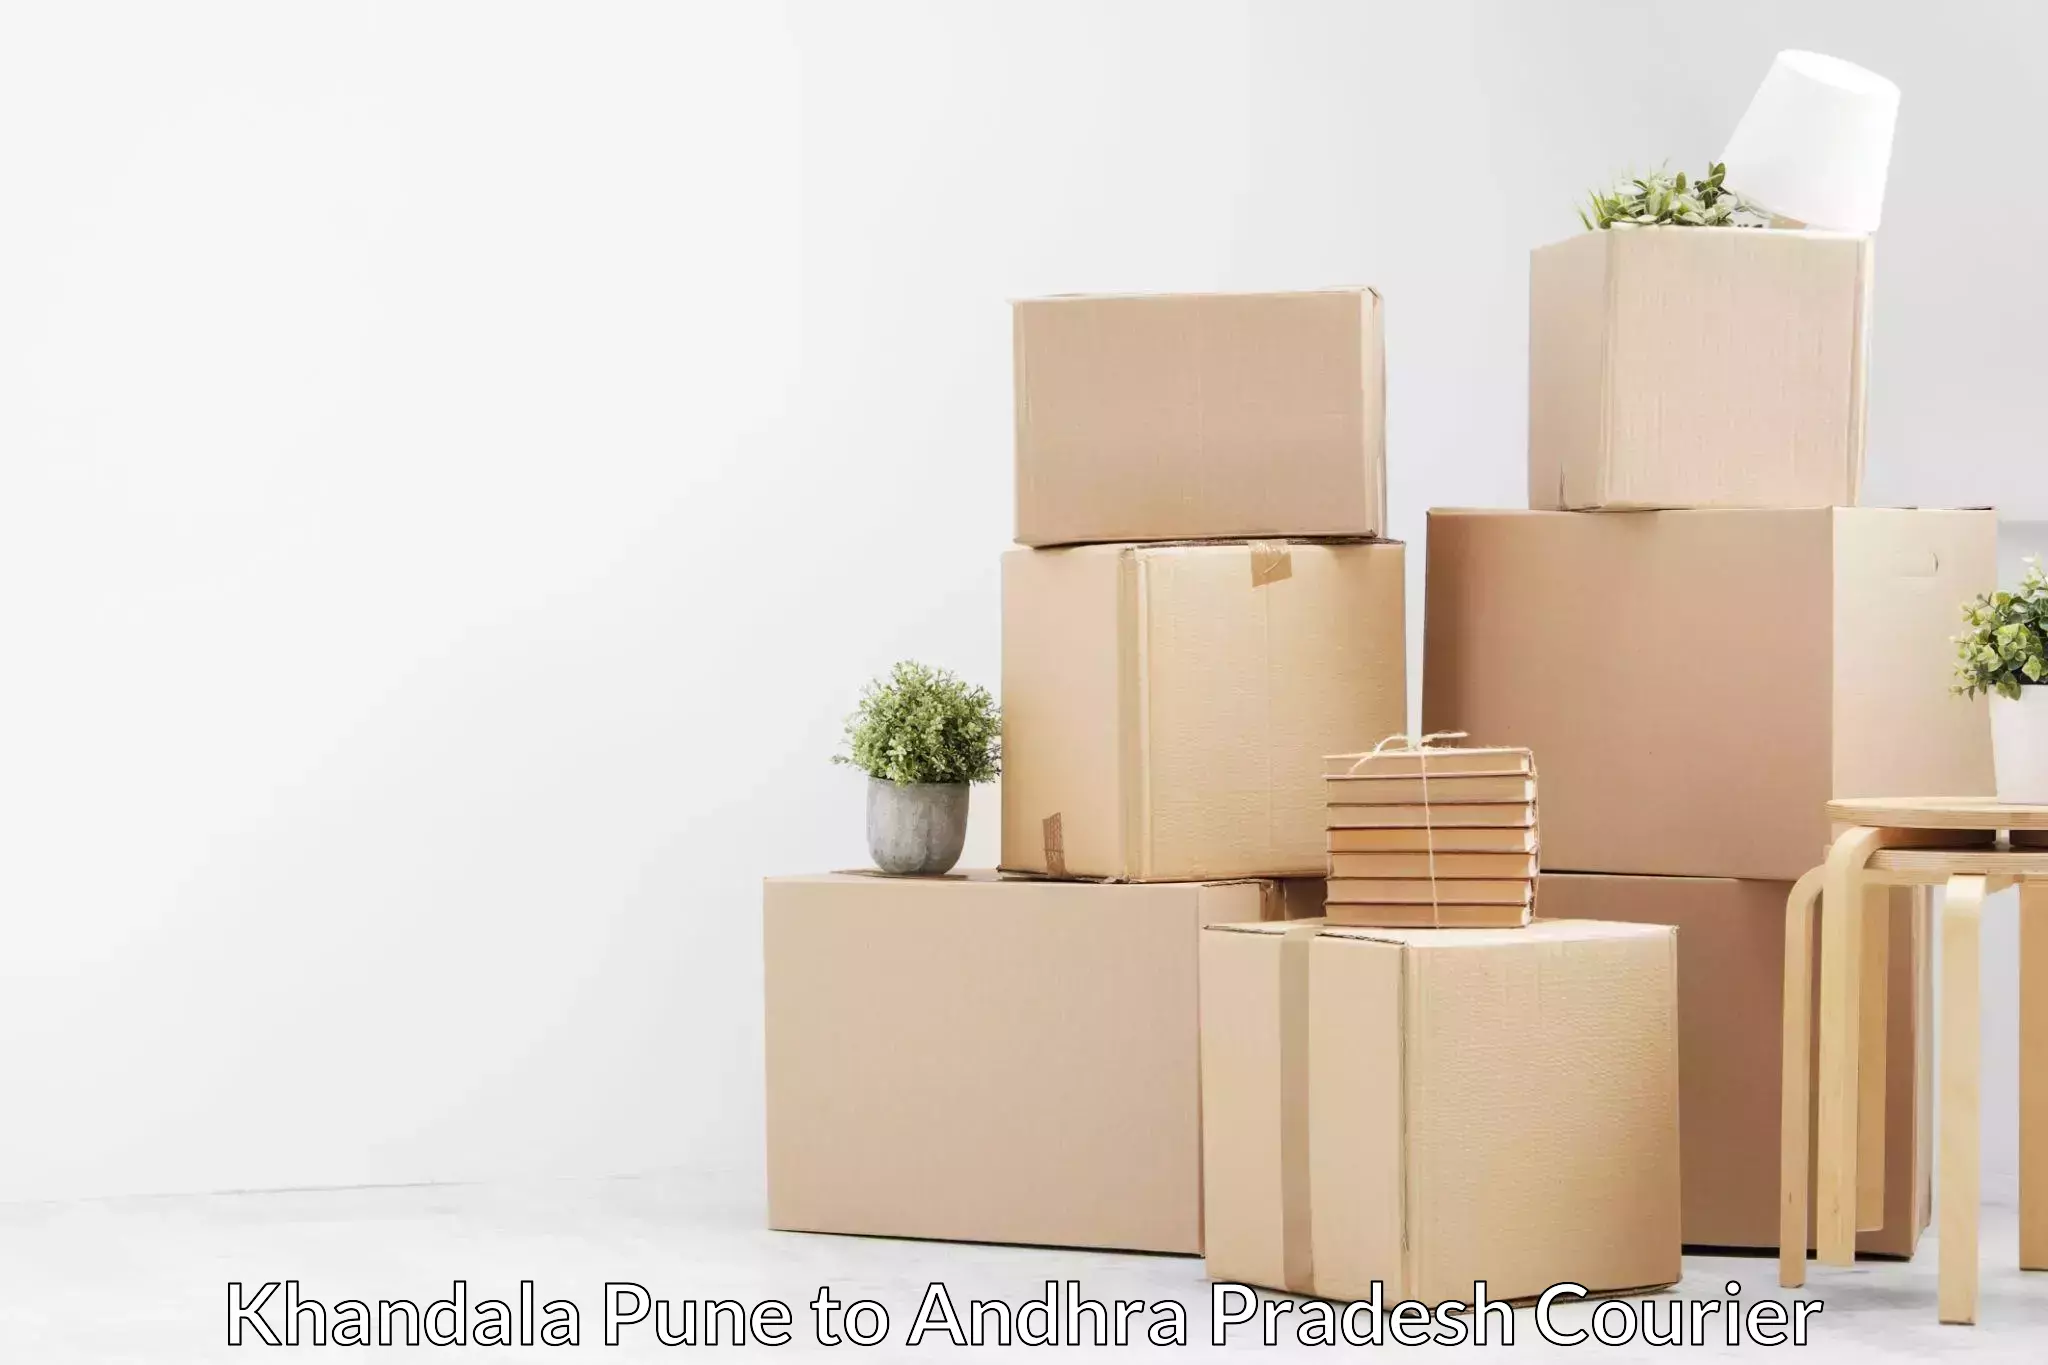 Professional moving company Khandala Pune to Allagadda